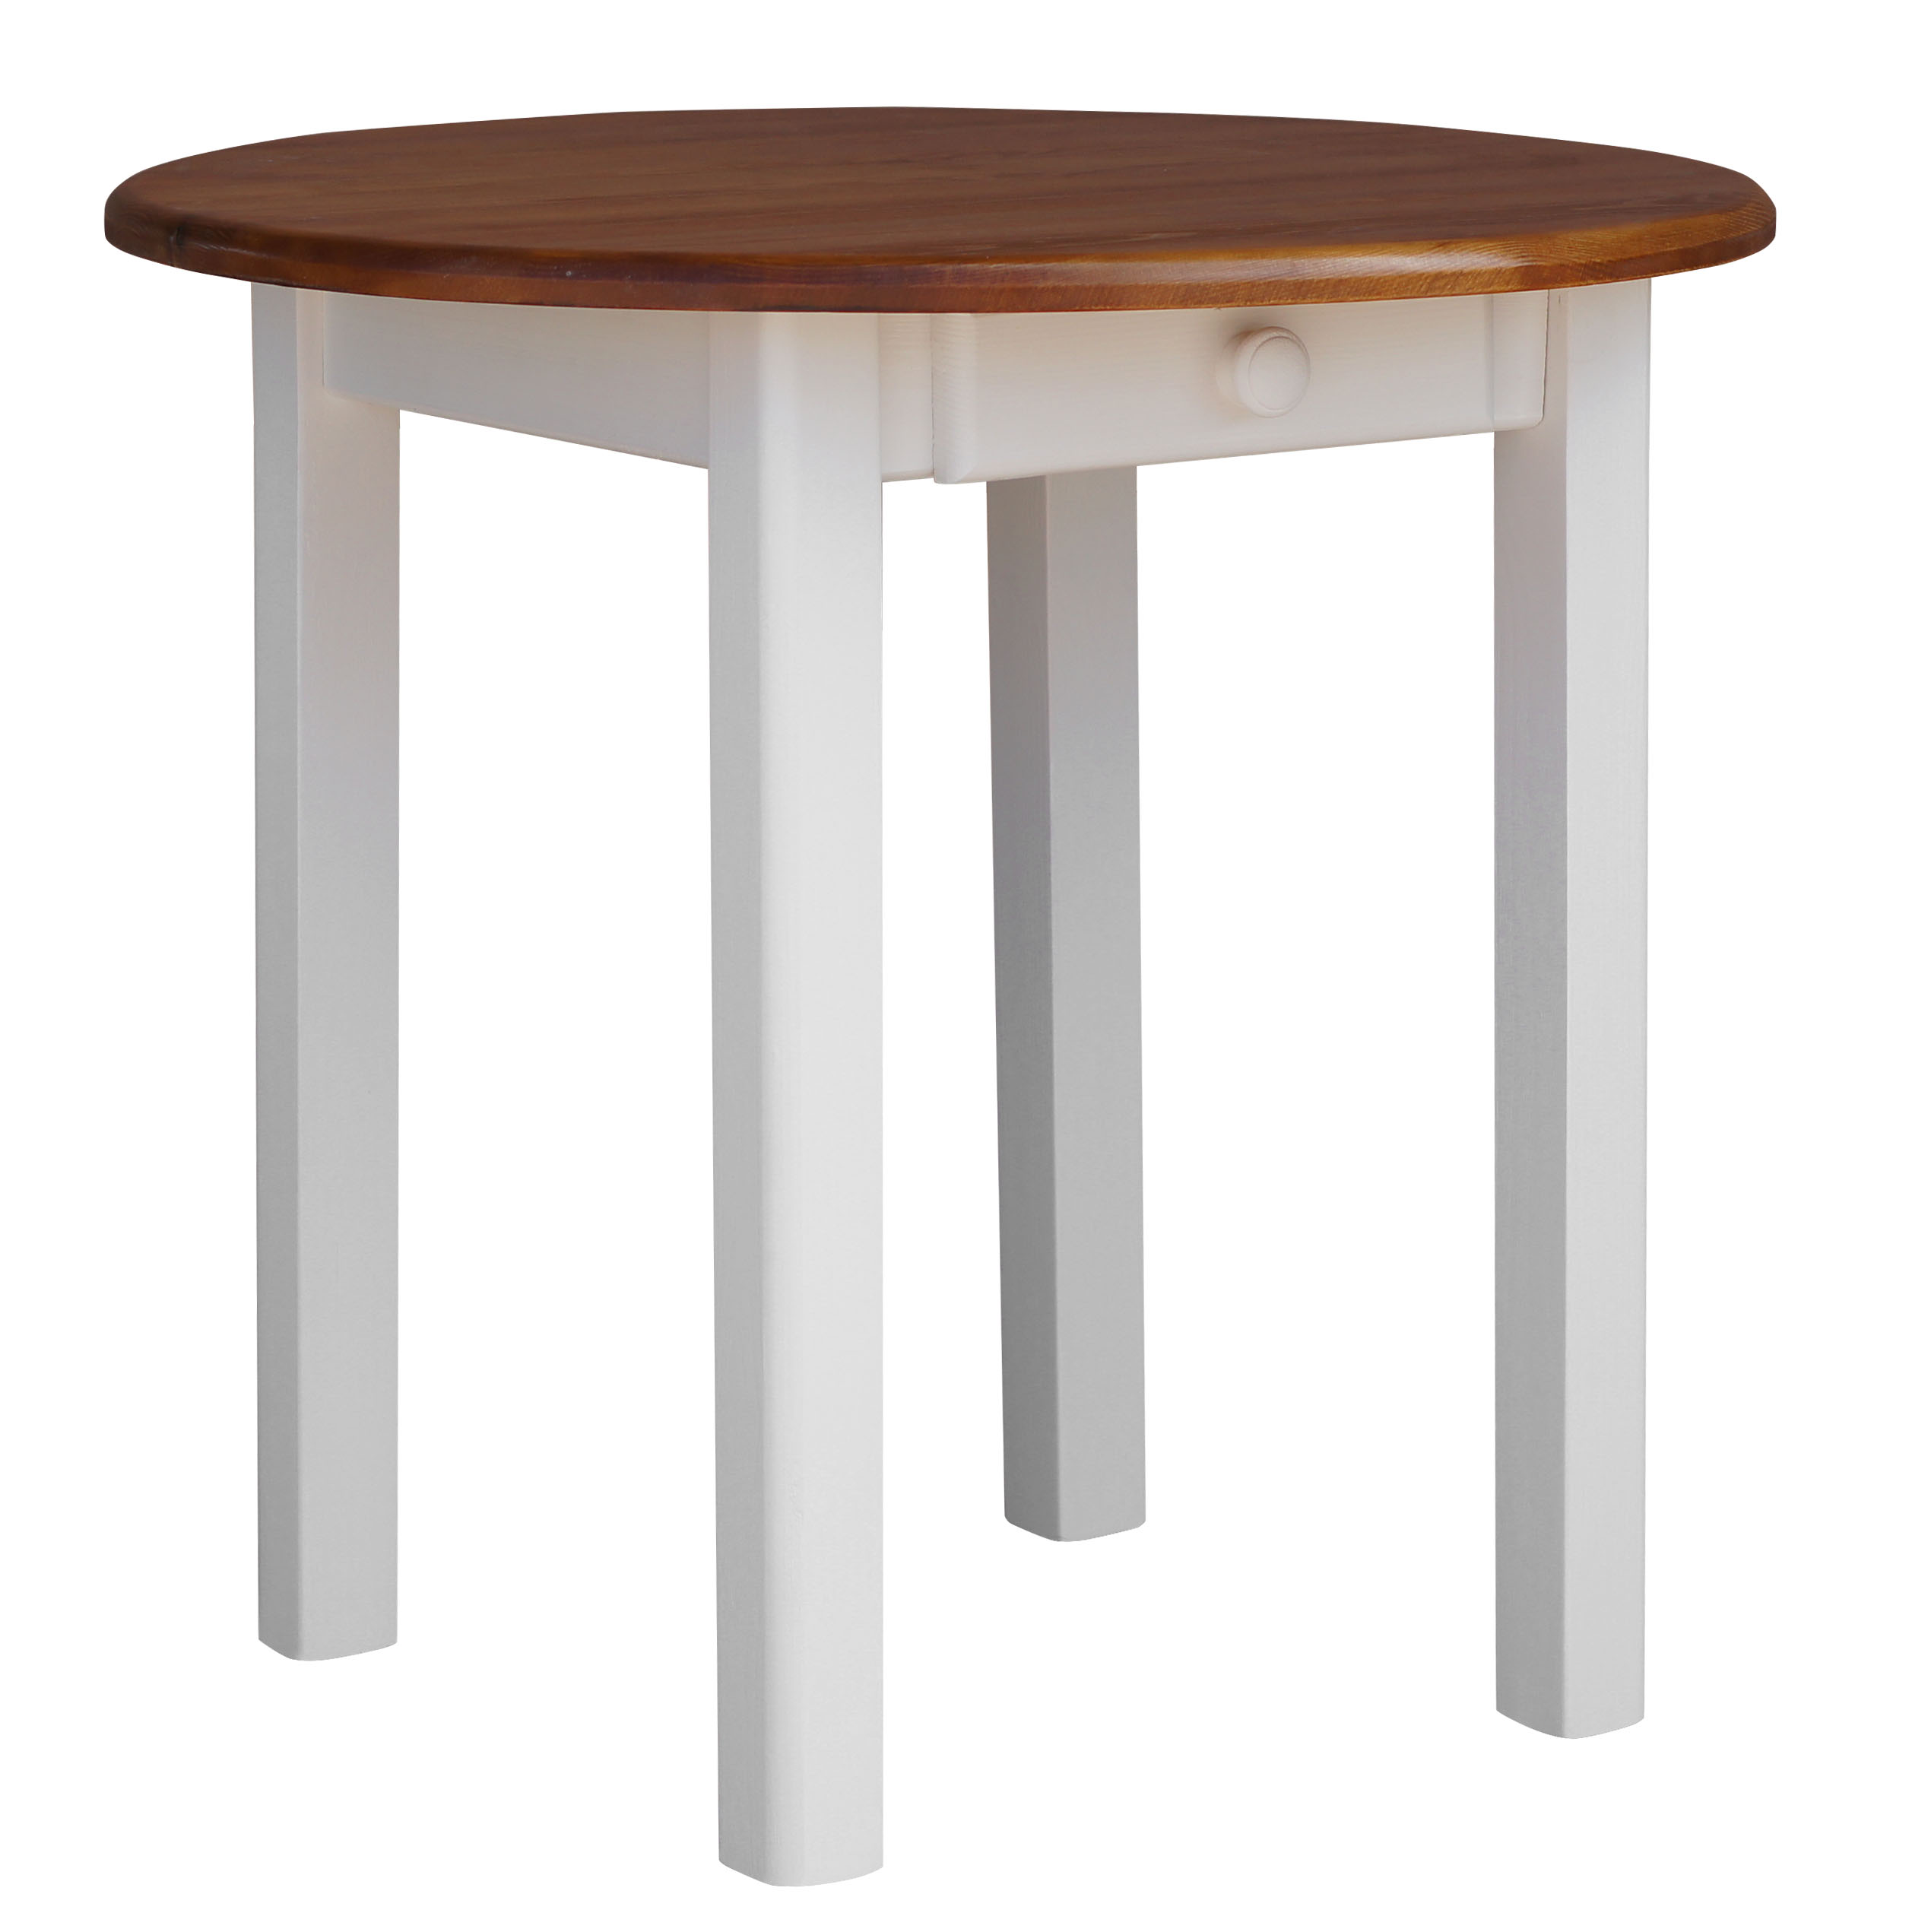 Кухонный стол 80 см. Круглый стол 60 см Borneo. Стол кухонный круглый. Стол круглый 80 см. Стол круглый 60х60.